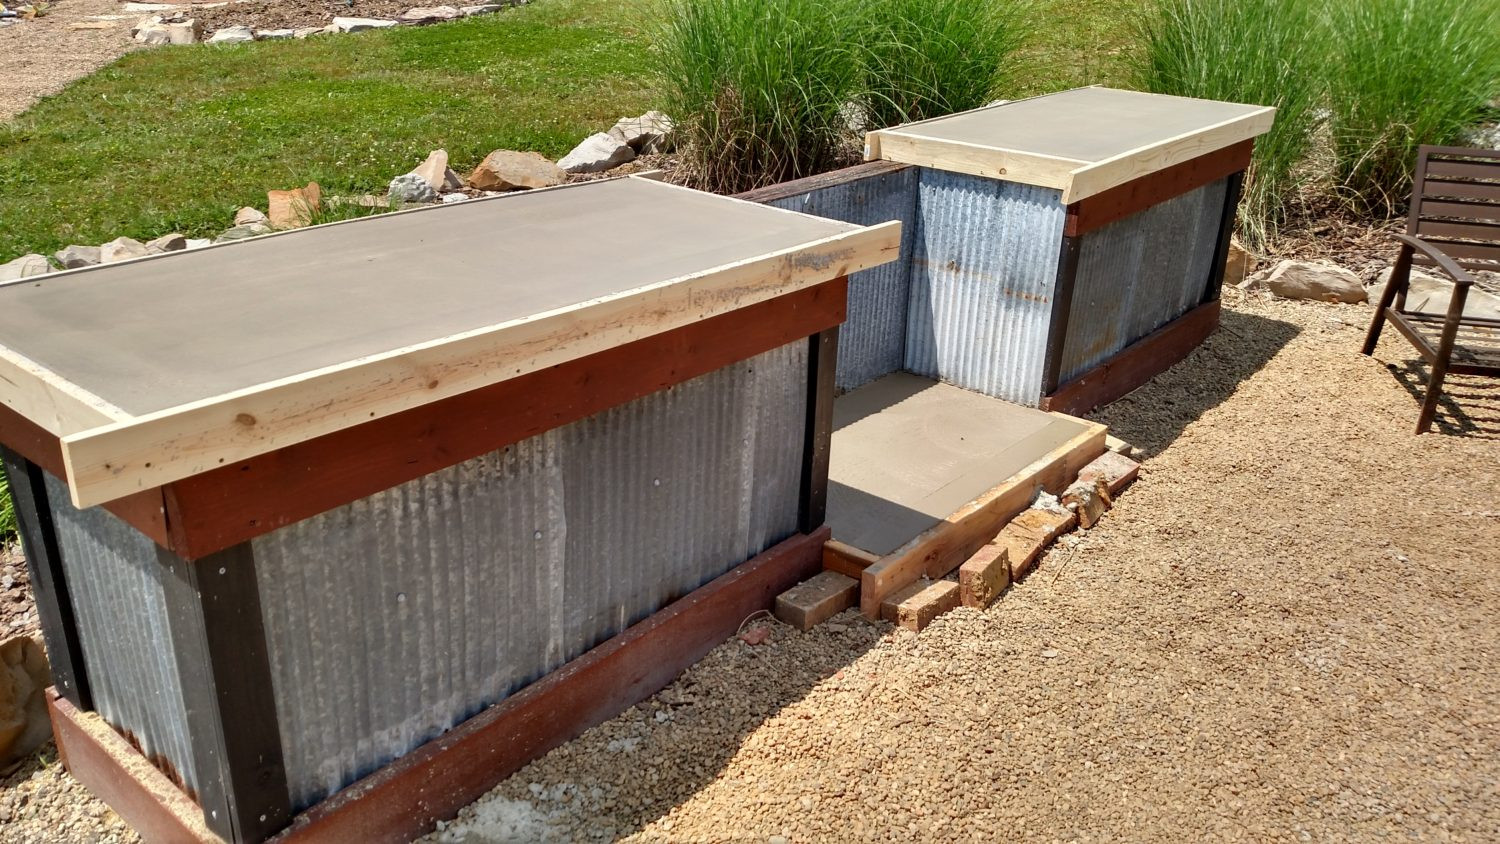 DIY Outdoor Concrete Countertop
 Creating An Inexpensive Outdoor Kitchen With Concrete